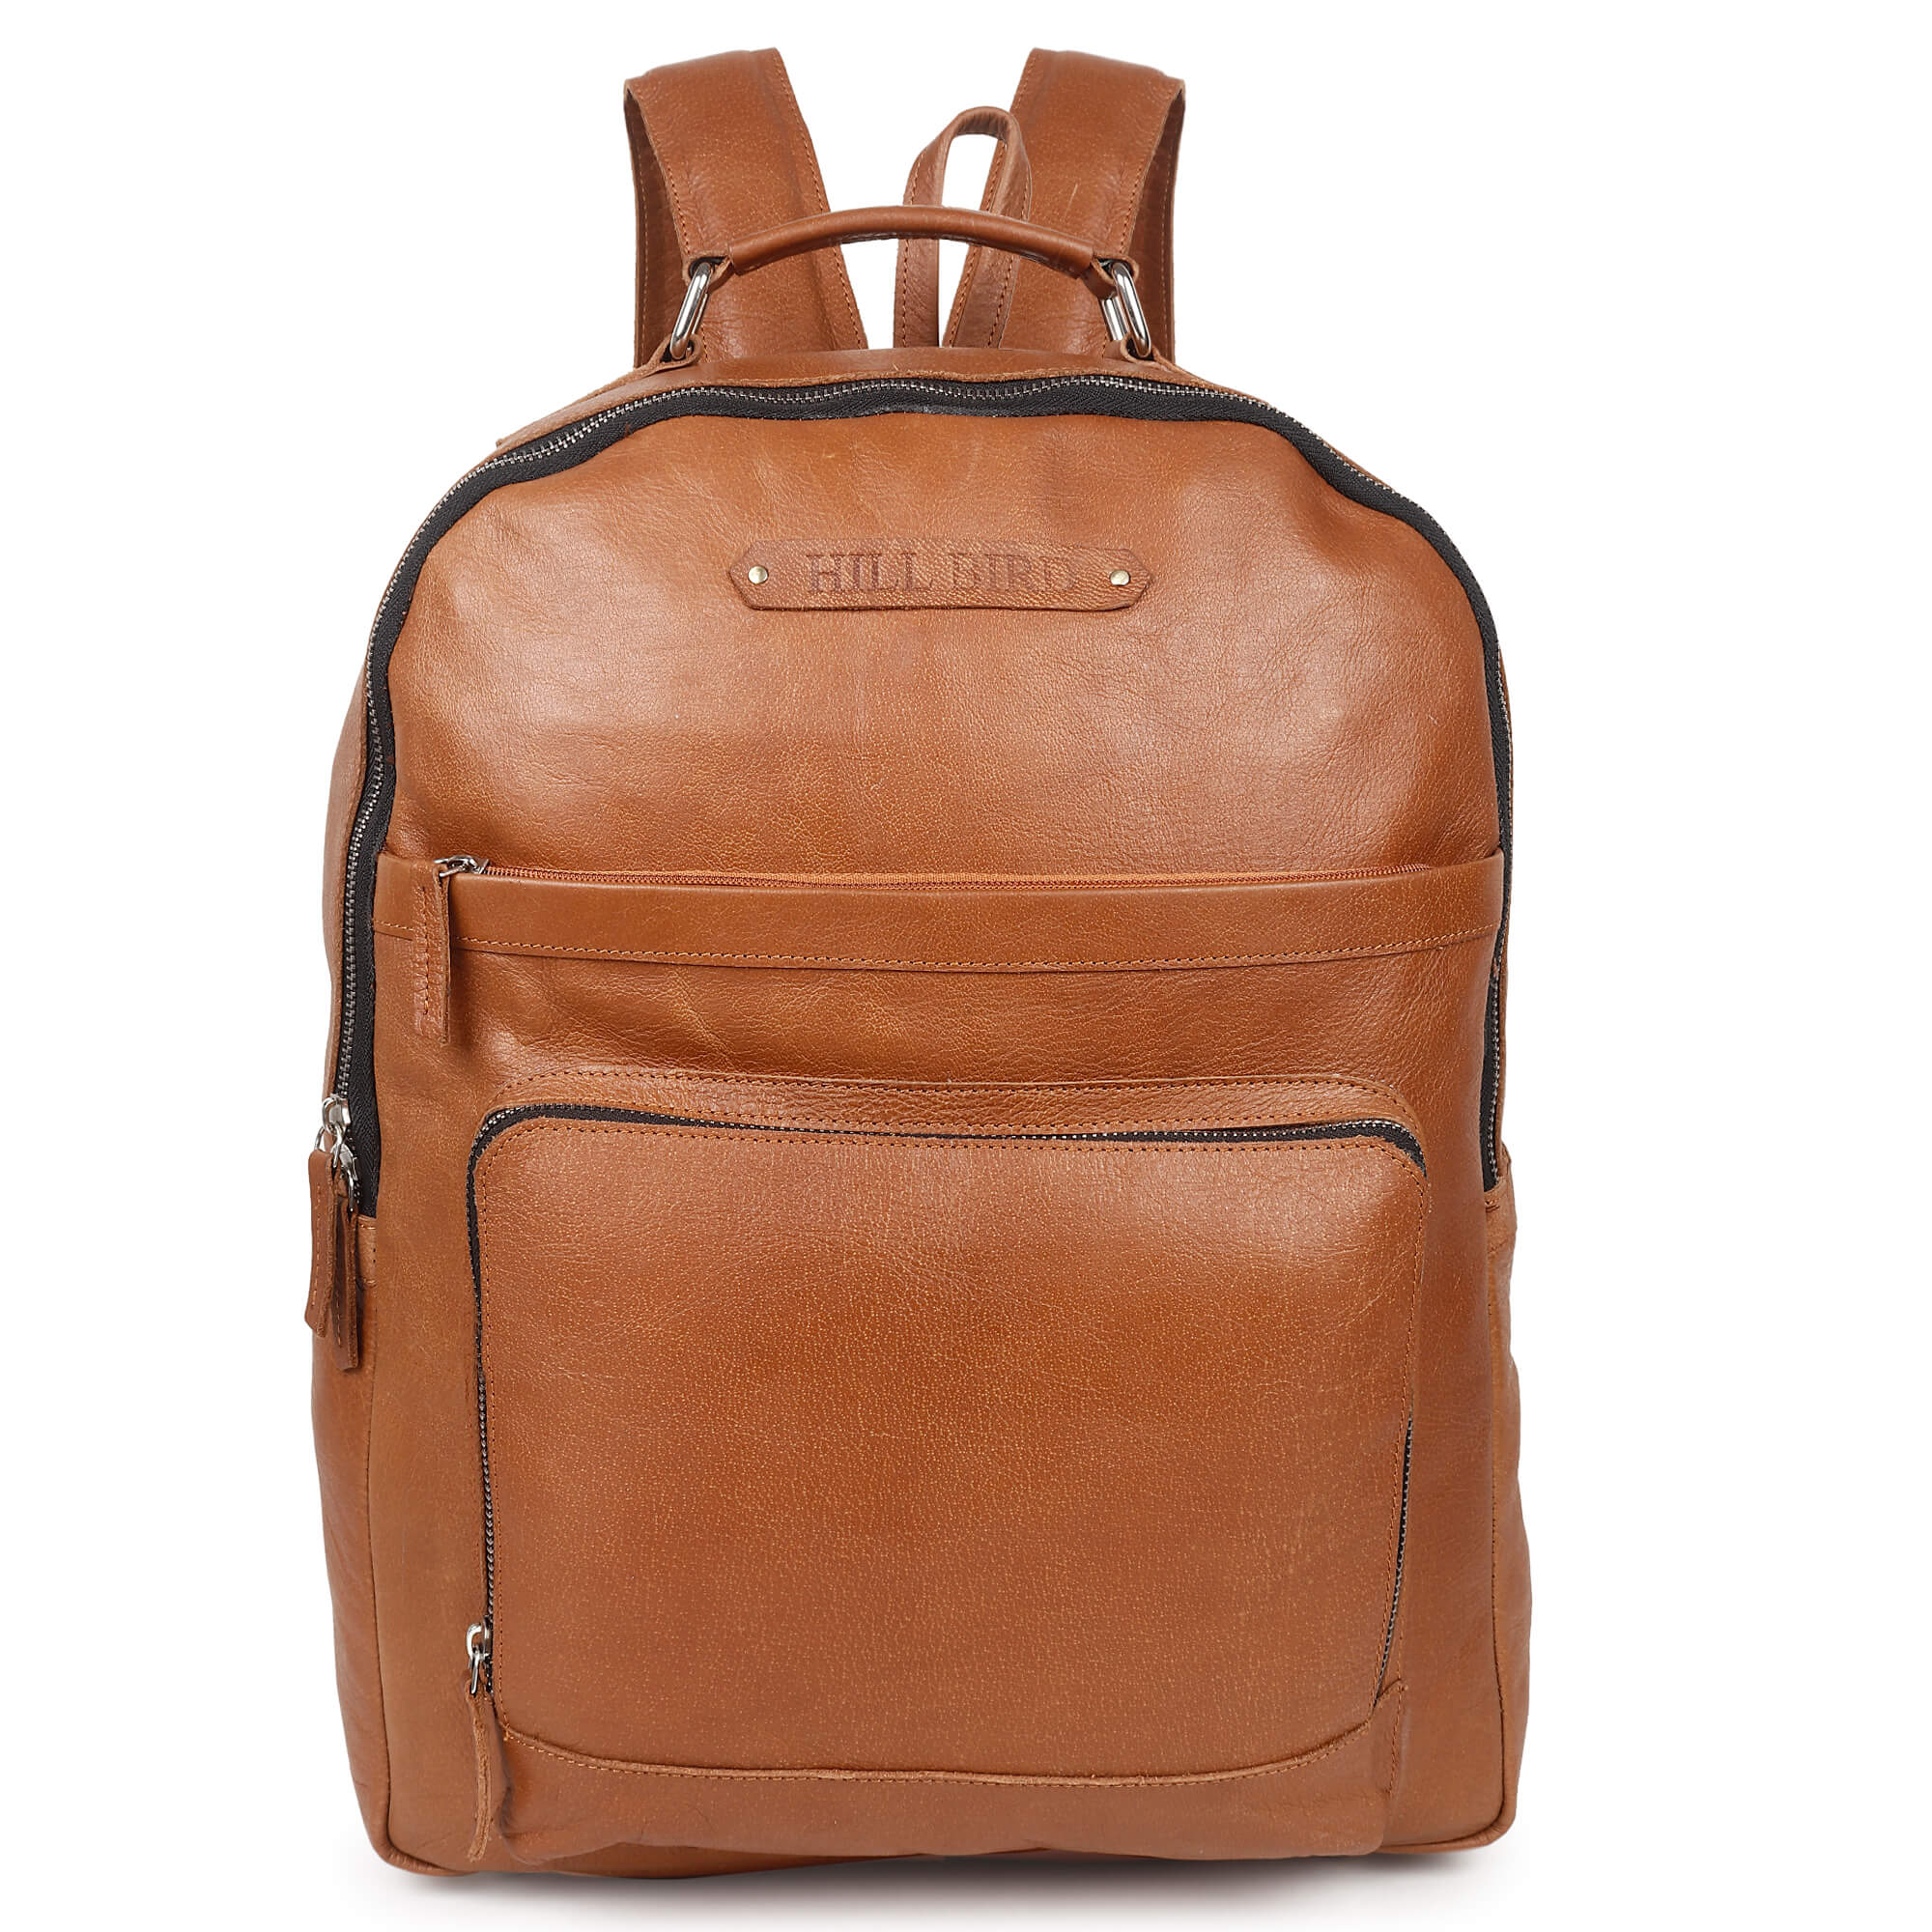 HILLBIRD Sircon Tan Leather Backpack